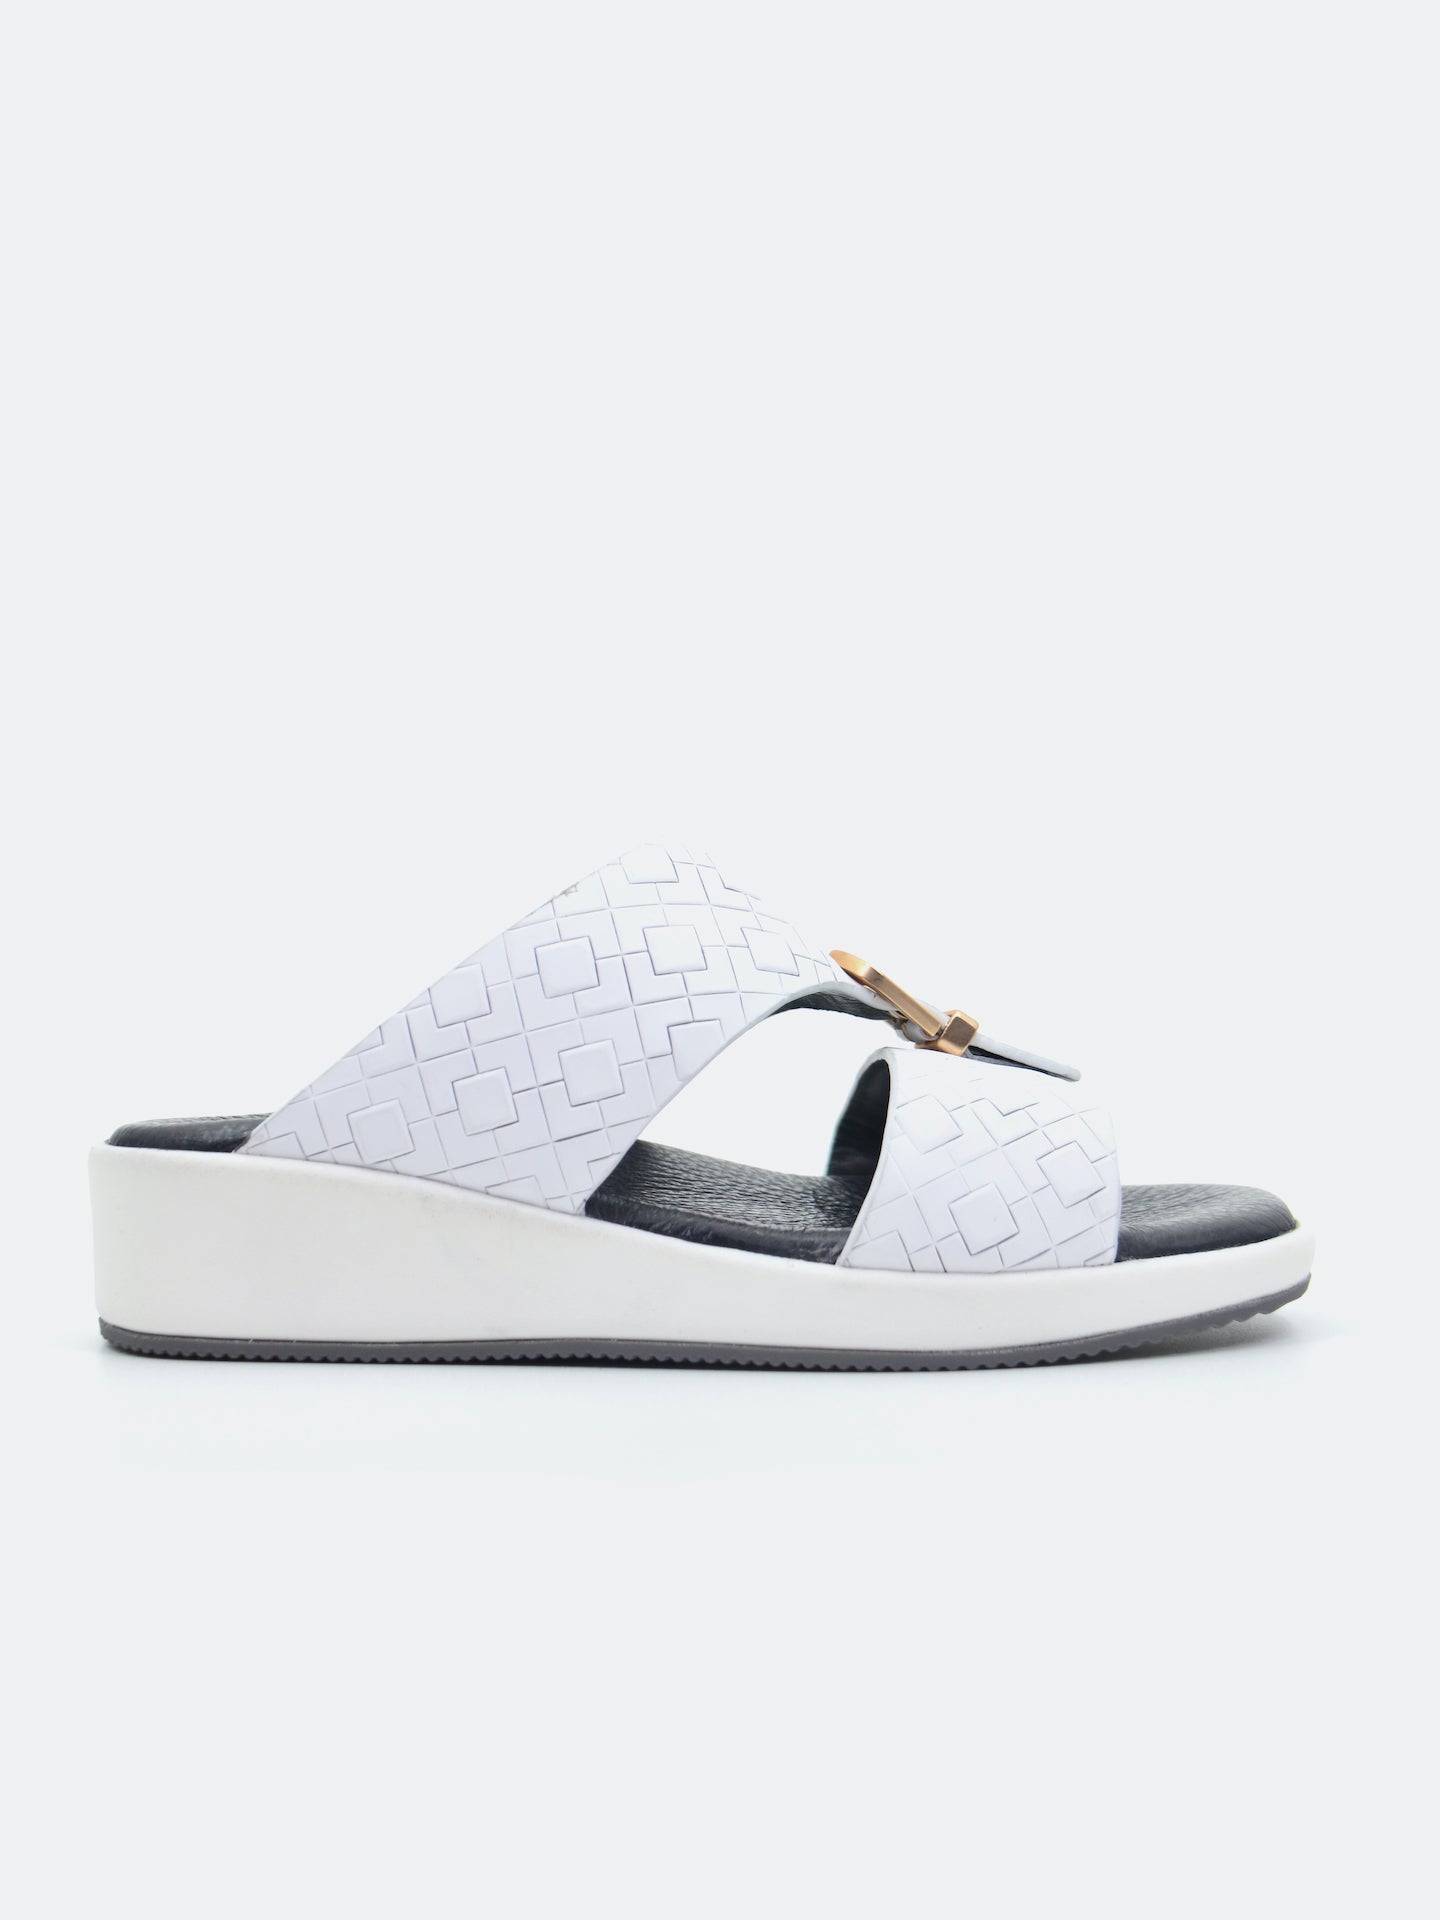 Barjeel Uno SP1-030 Boys Arabic Sandals #color_White